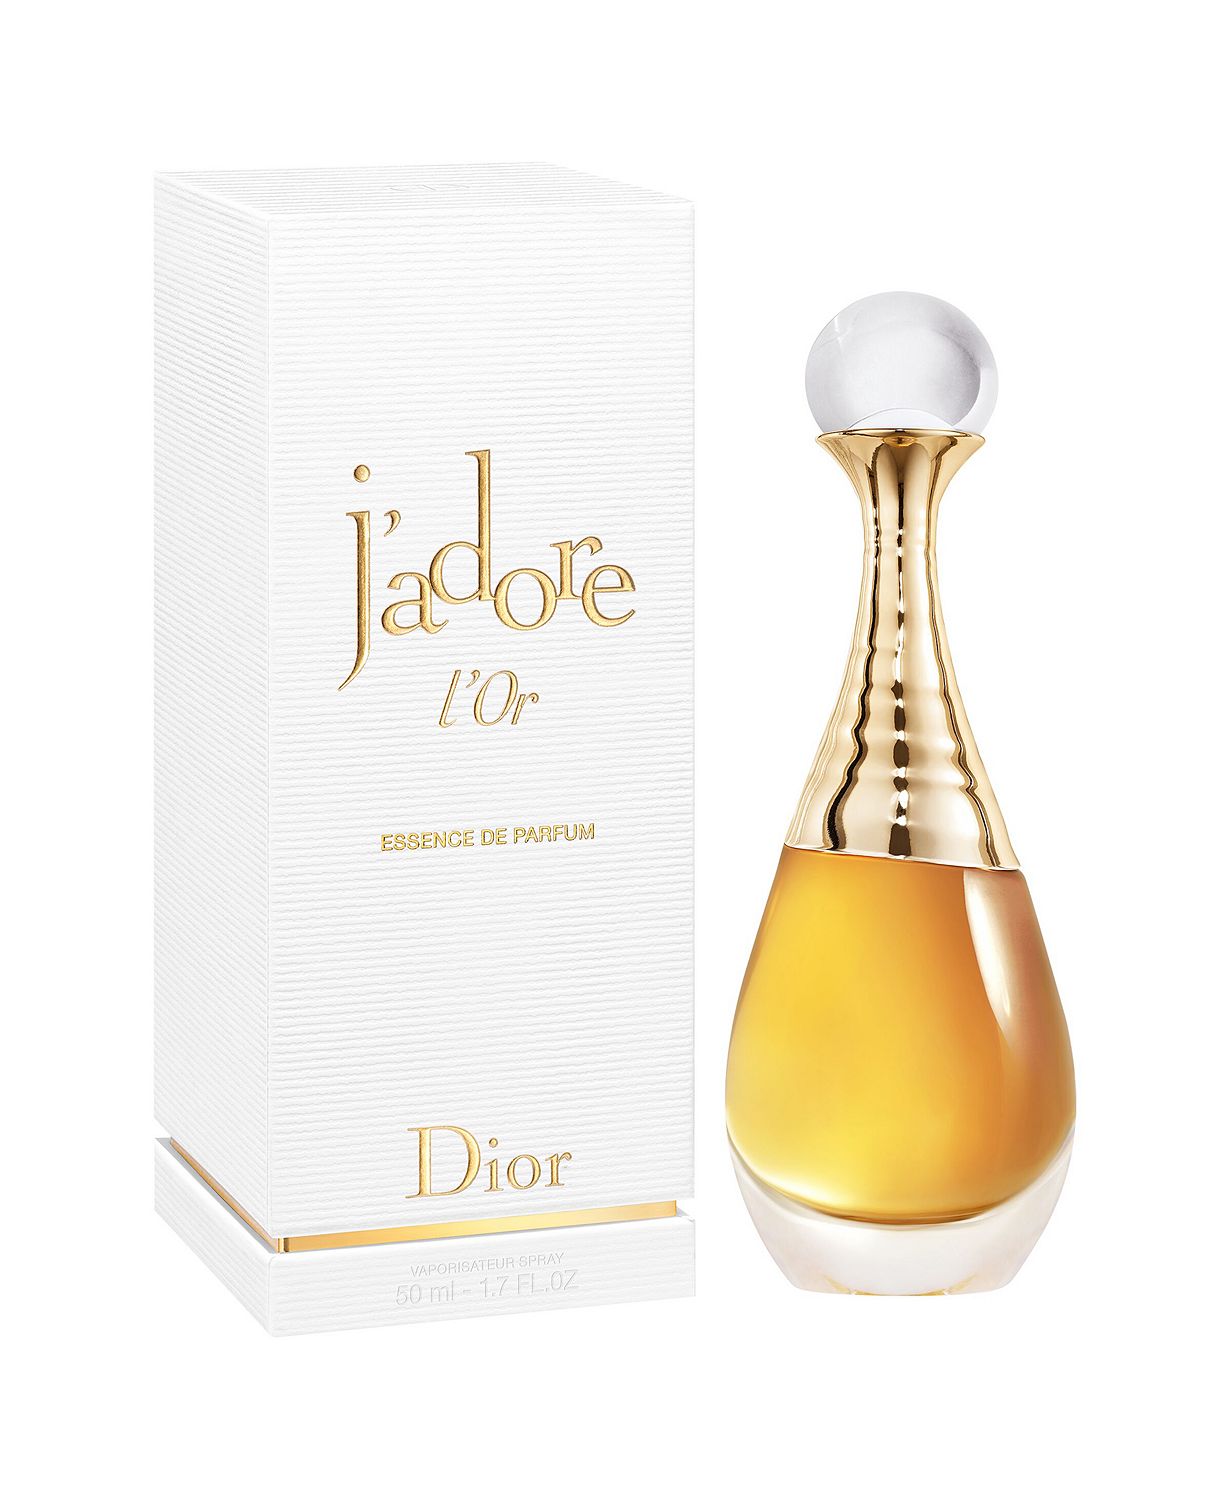 J'adore l'Or Essence de Parfum, 1.7 oz.